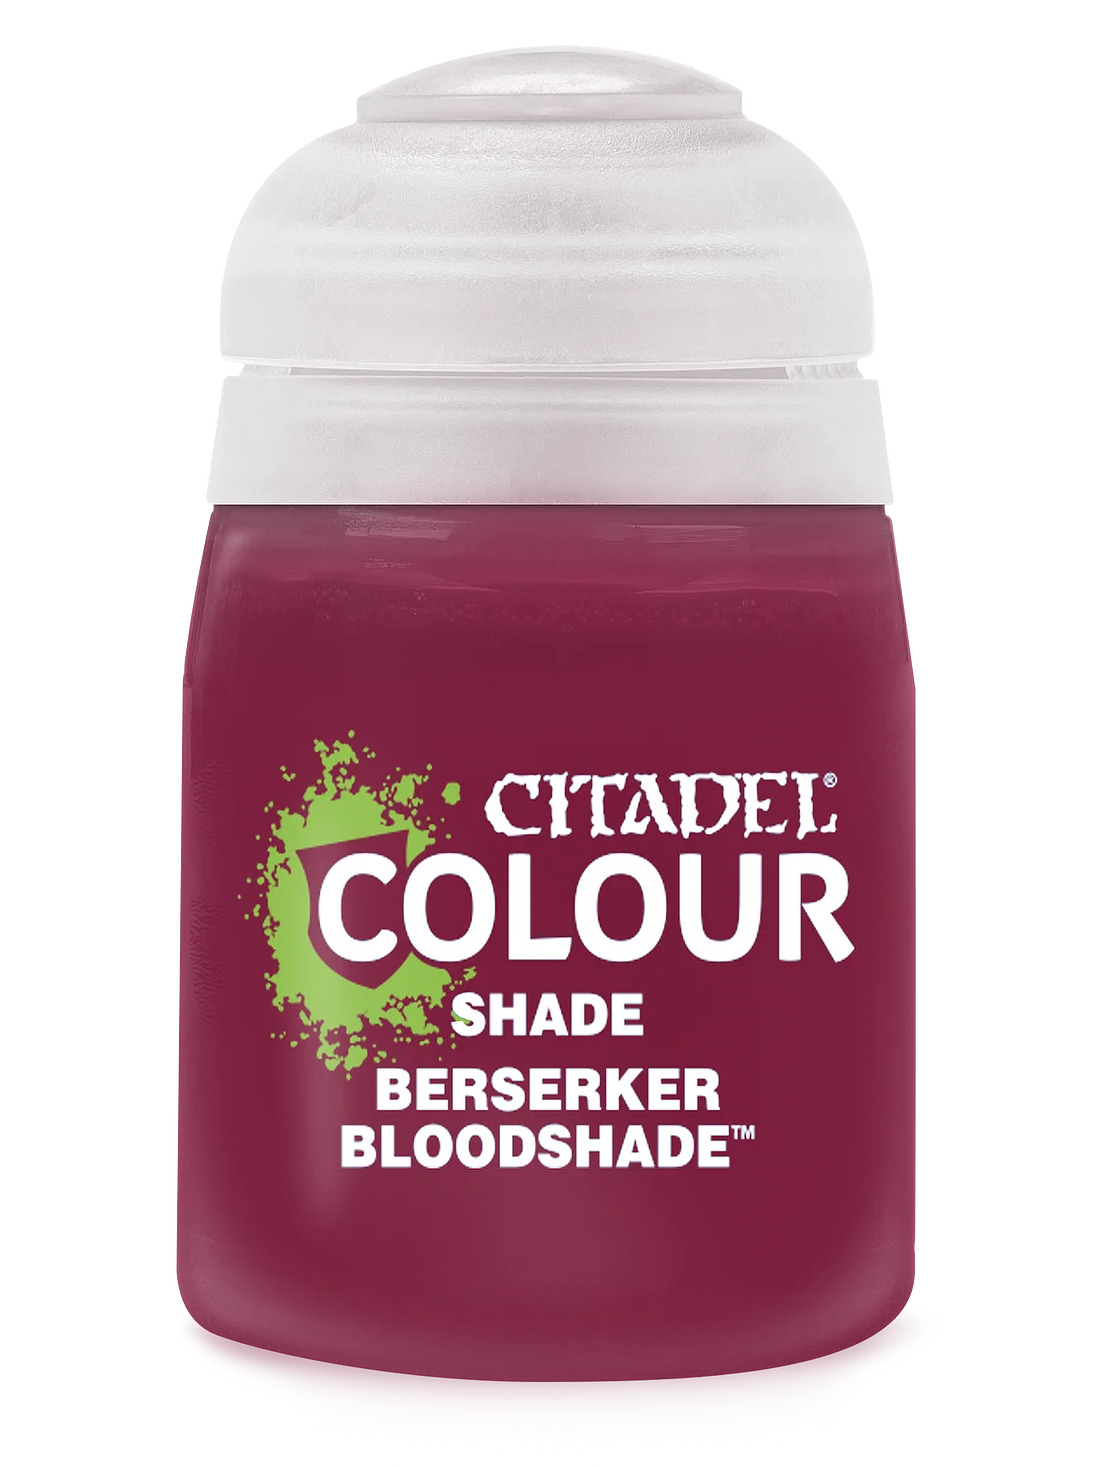 Citadel Shade (Berserker Bloodshade) - tónová barva, červená